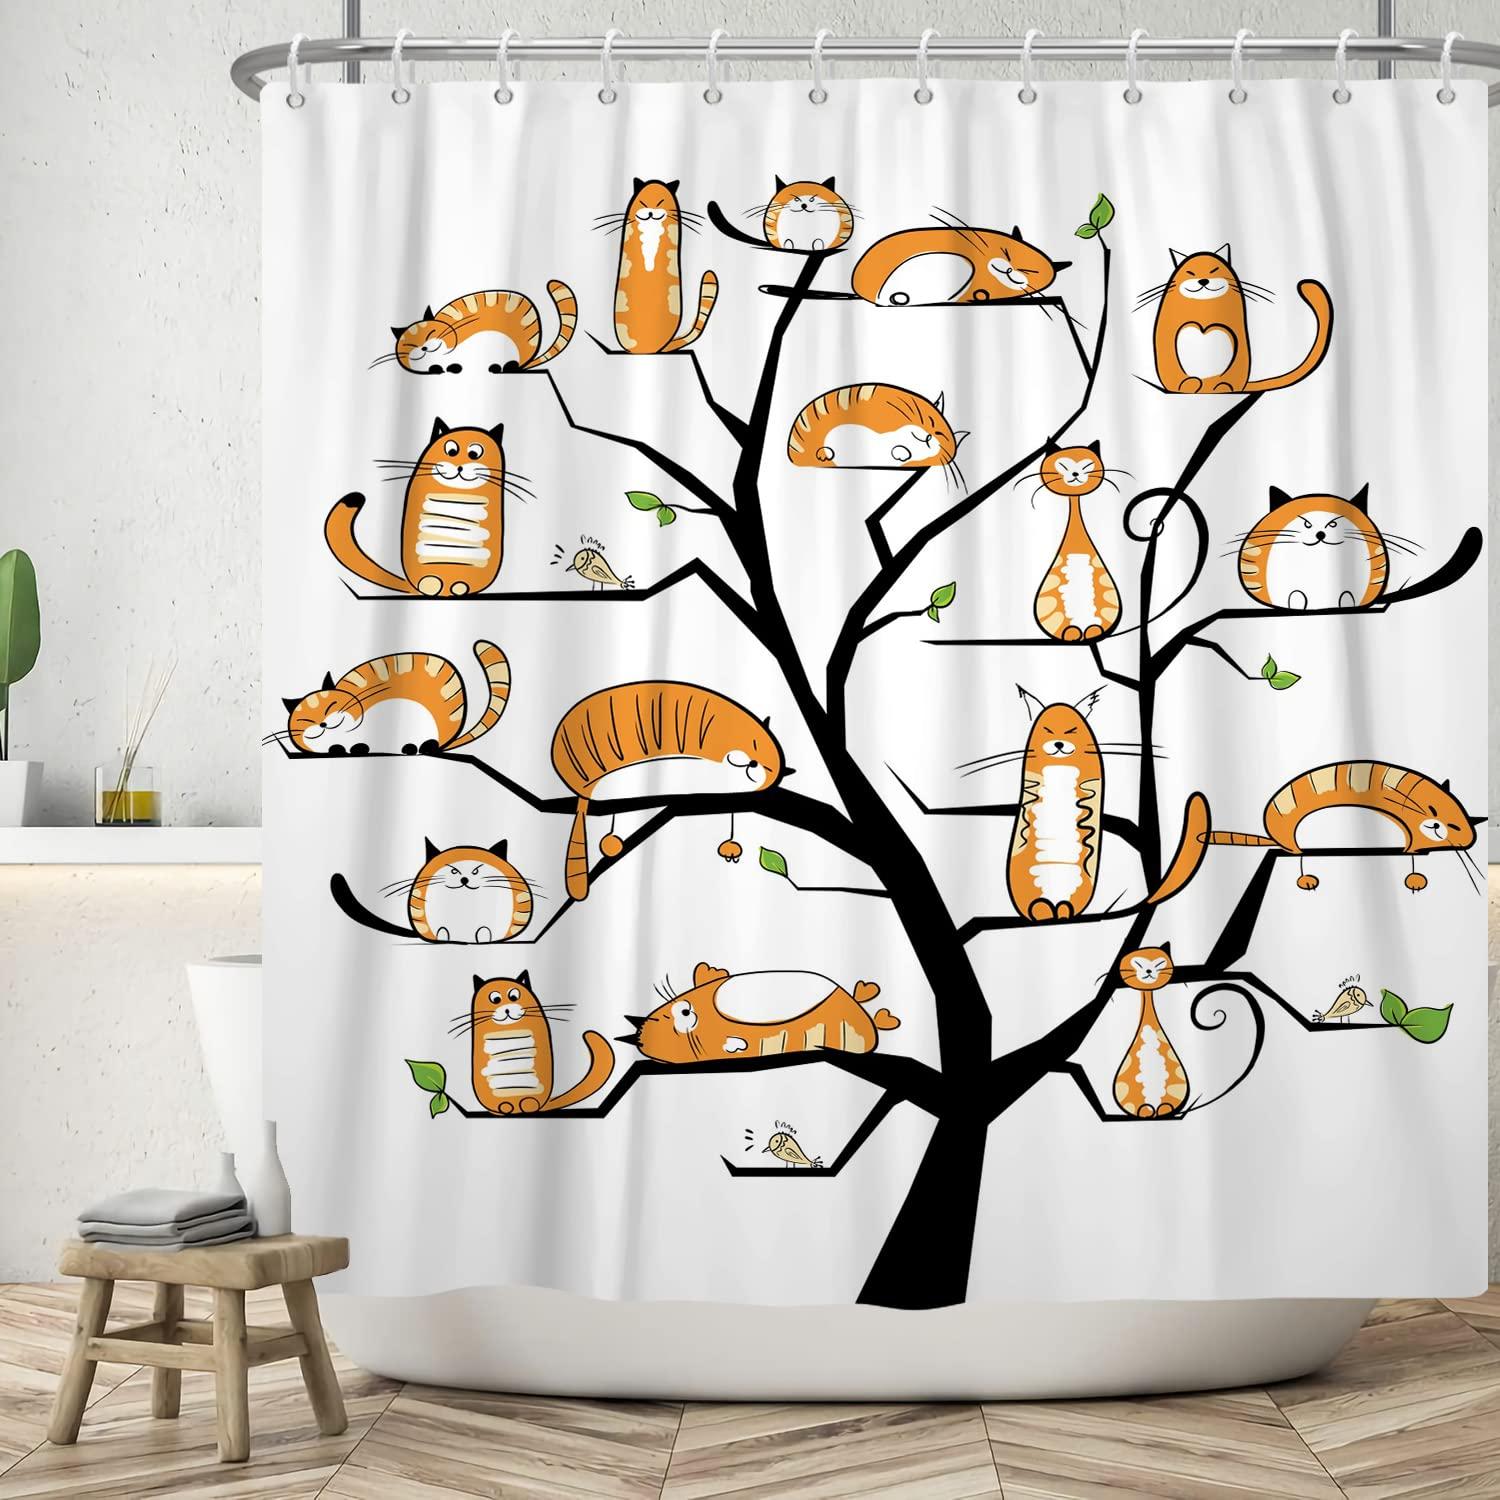 Ttincceer Cat Shower Curtain Cute Orange Kitten Tree Bathroom Curtain 60x72inch Funny Animal Pet Cat Shower Curtains Washable Bathtub Curtain for Children Bathroom Decor 0